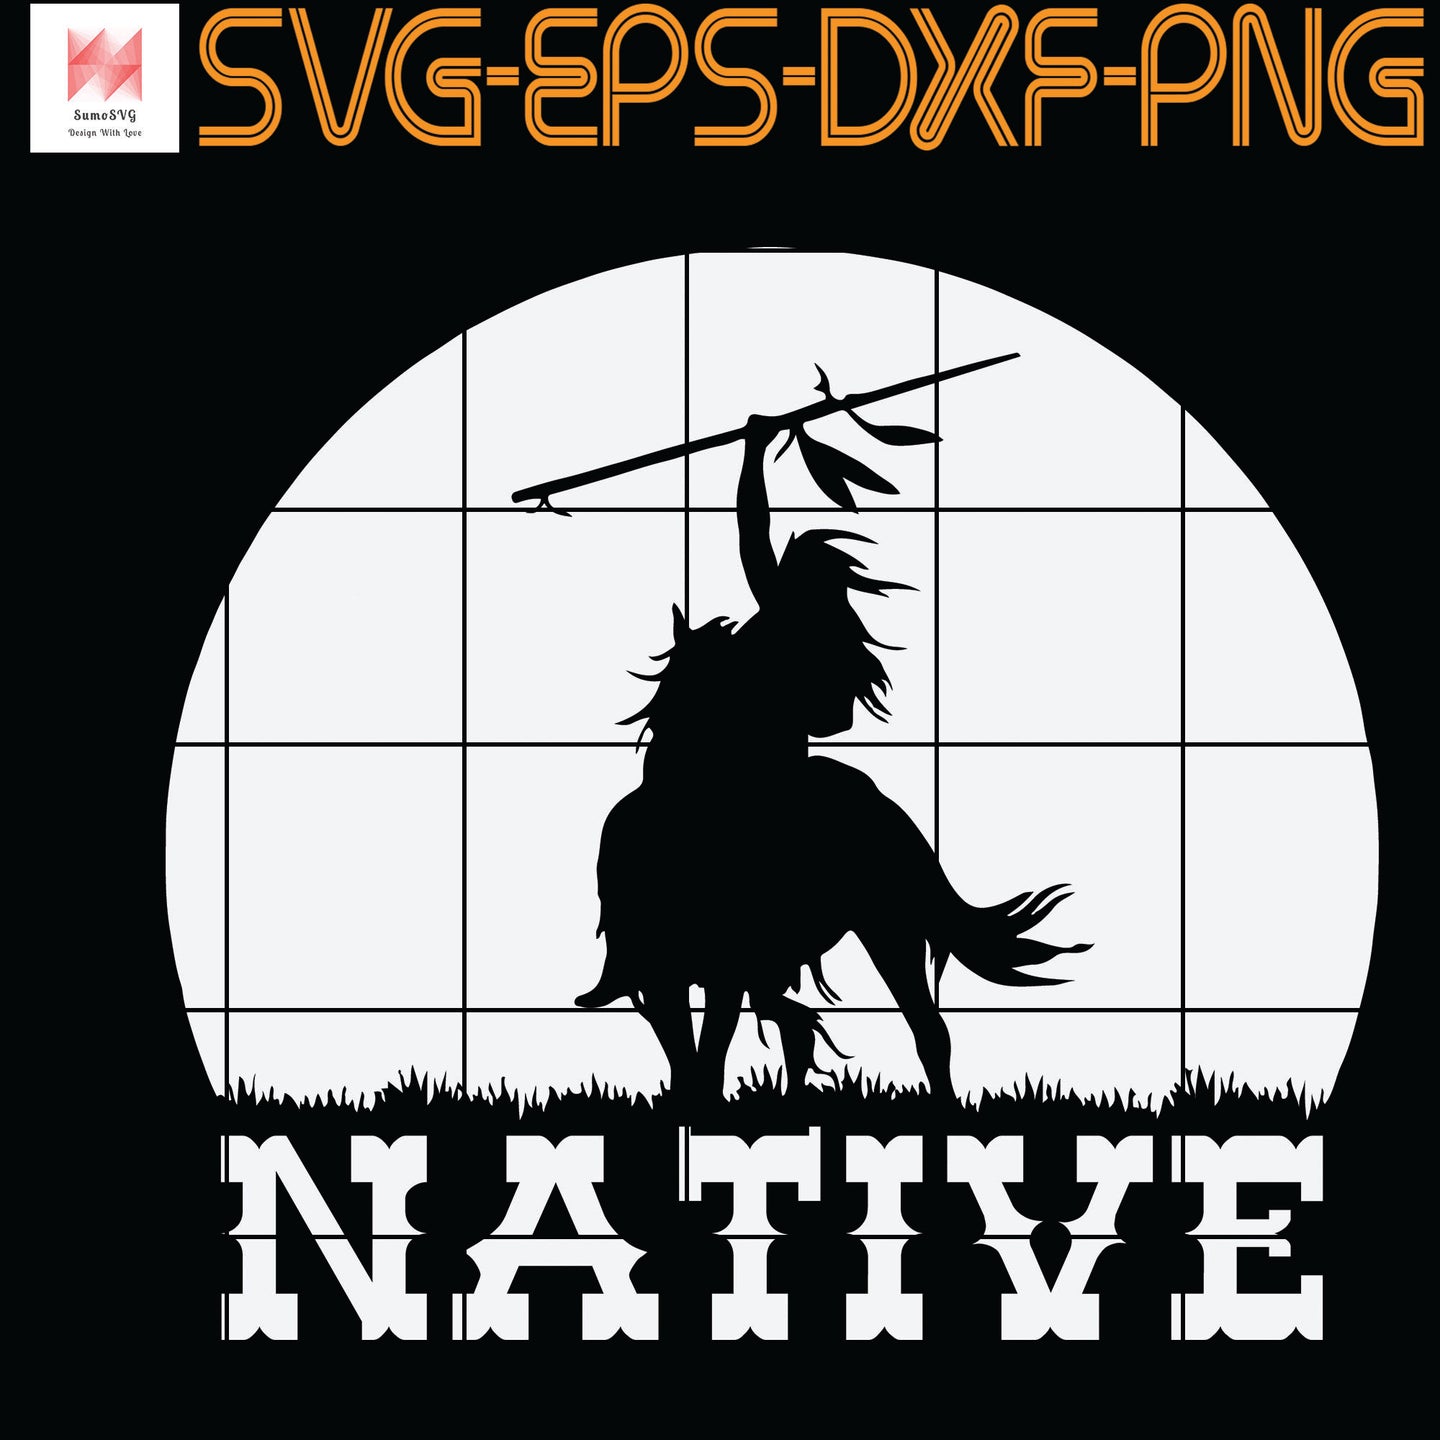 Download Northwest Native American Knight Pride Mountain Warrior Quotes Svg E Sumosvg